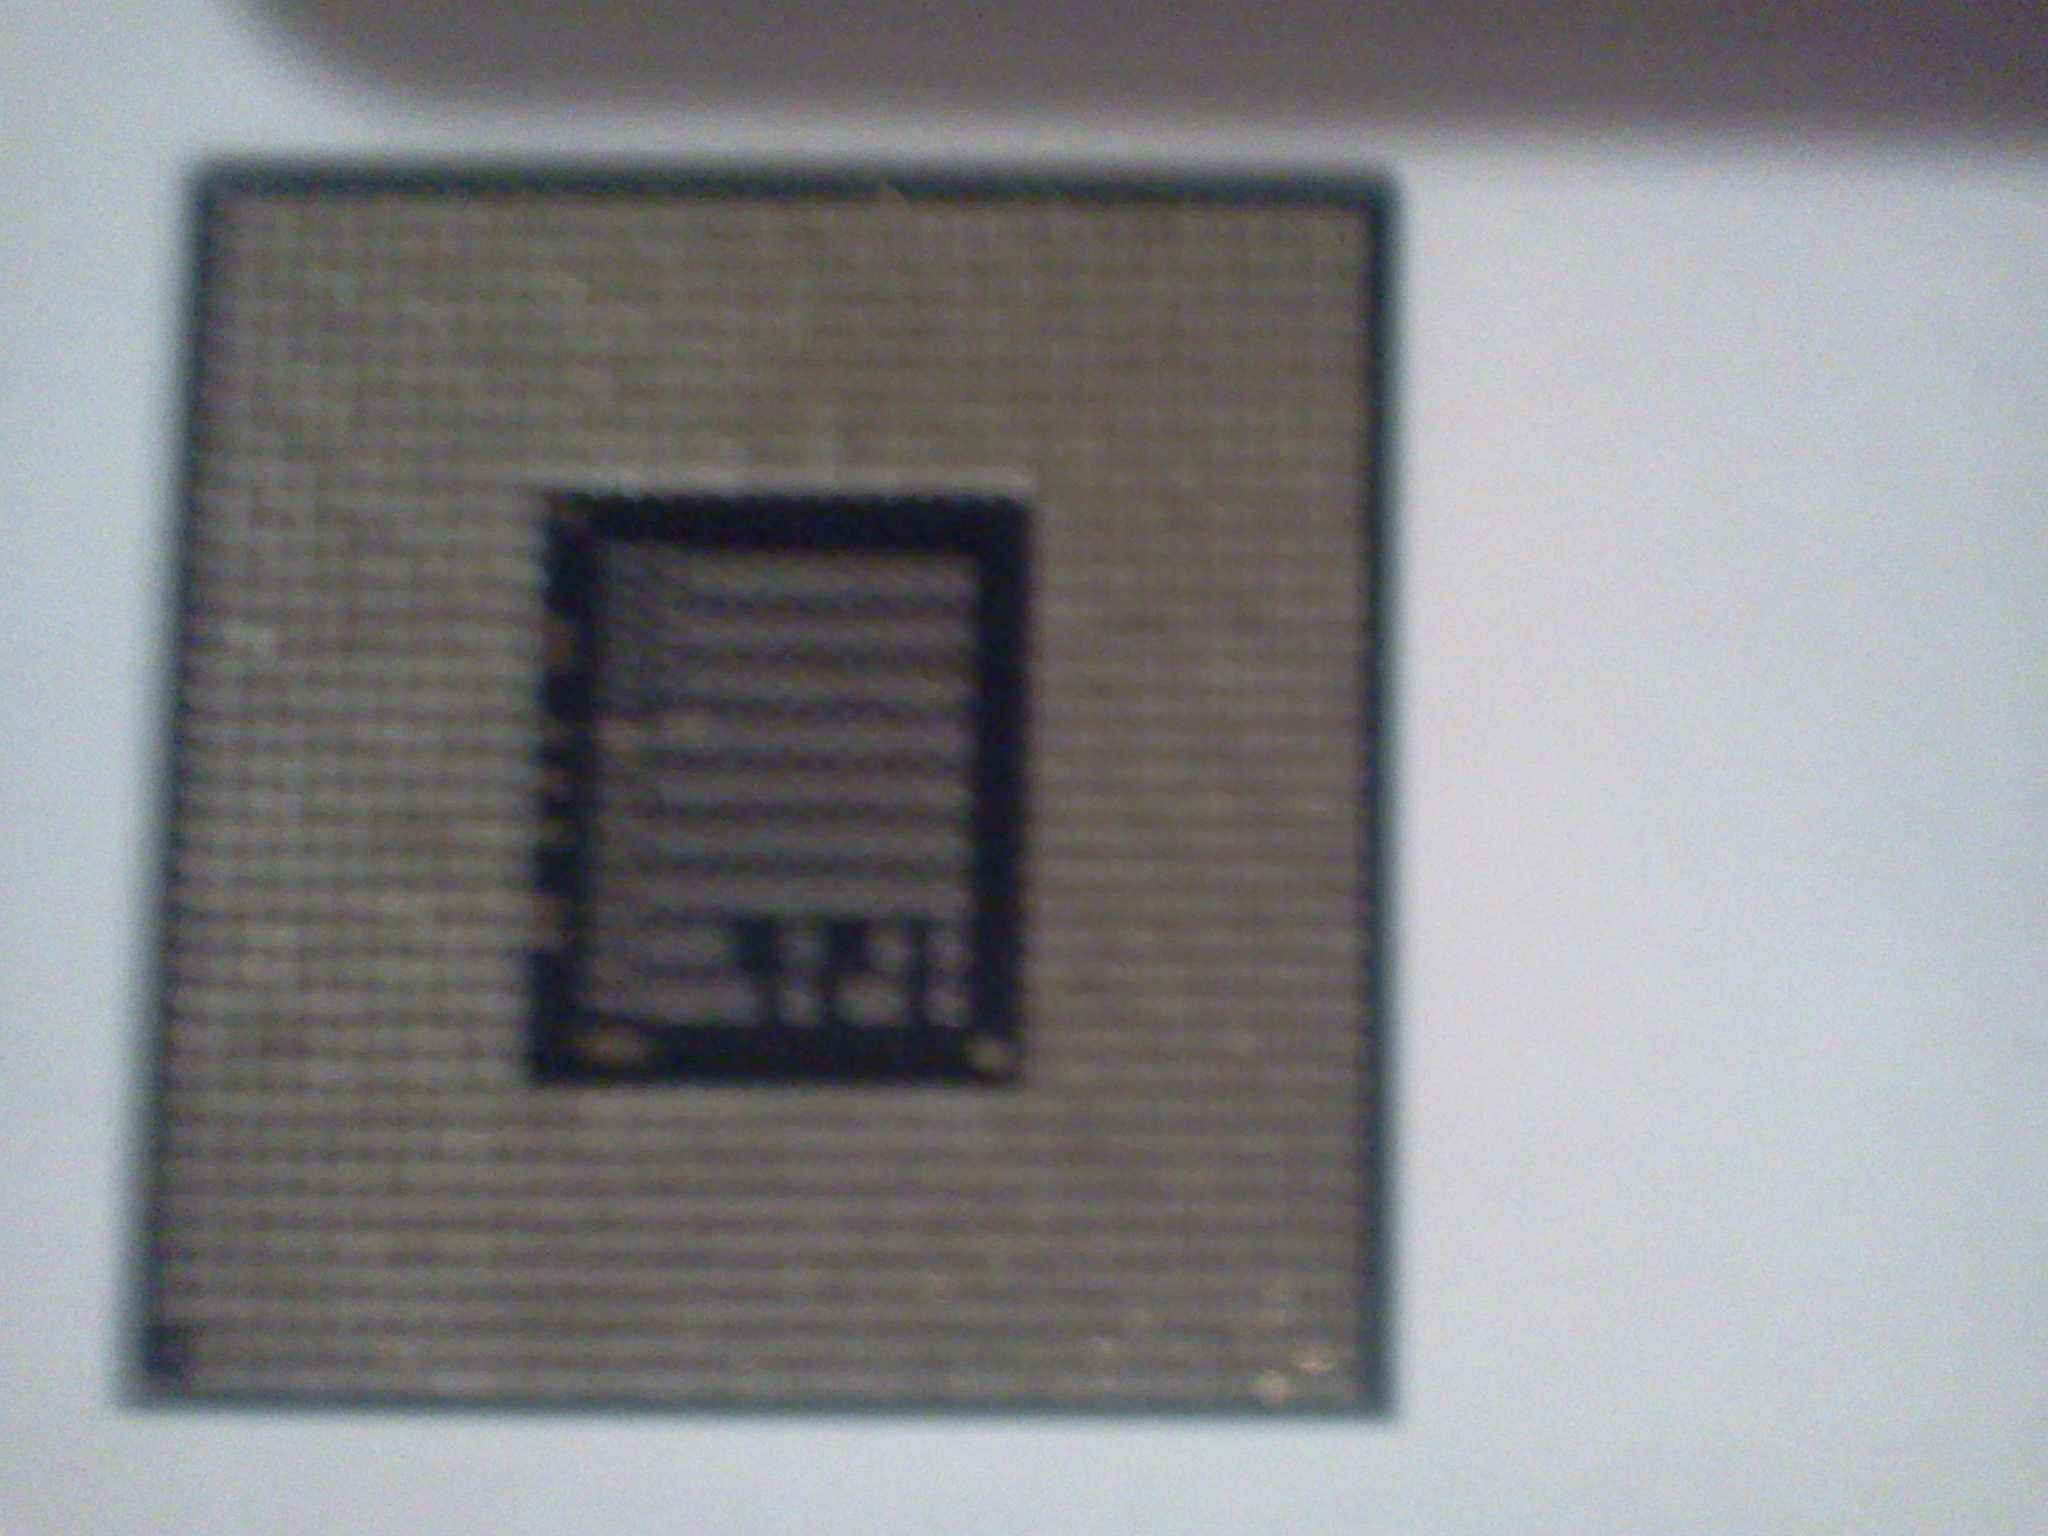 PROCESOR Intel i7-2640m do laptopa